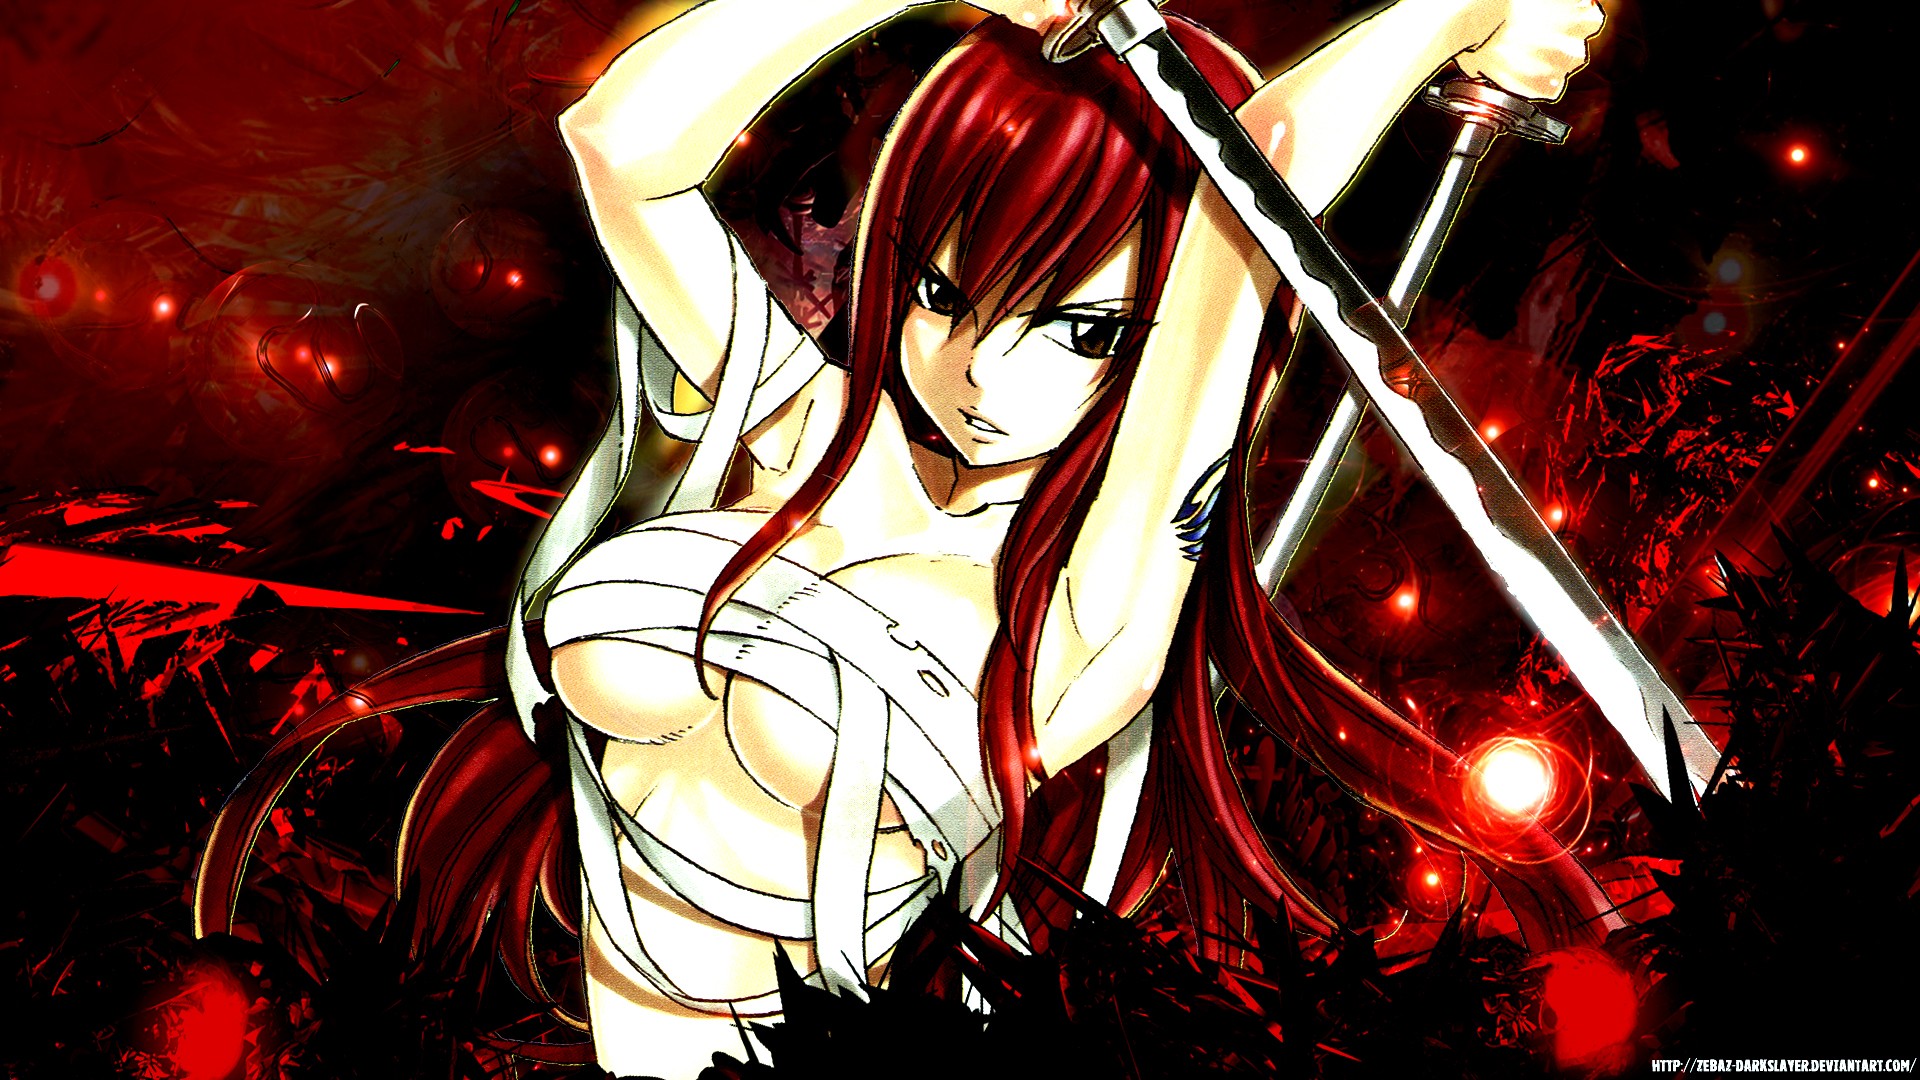 Anime 1920x1080 anime girls redhead Fairy Tail anime boobs big boobs sword women with swords weapon Scarlet Erza